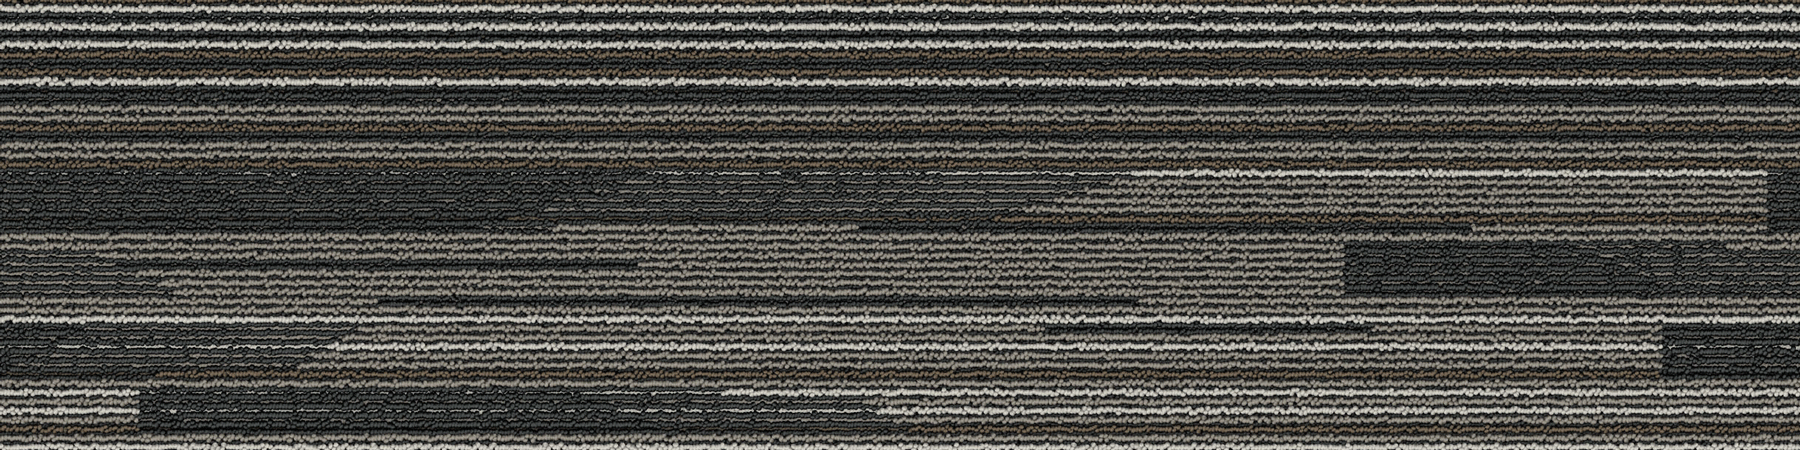 Standard Carpets (BUBAPLK773) product